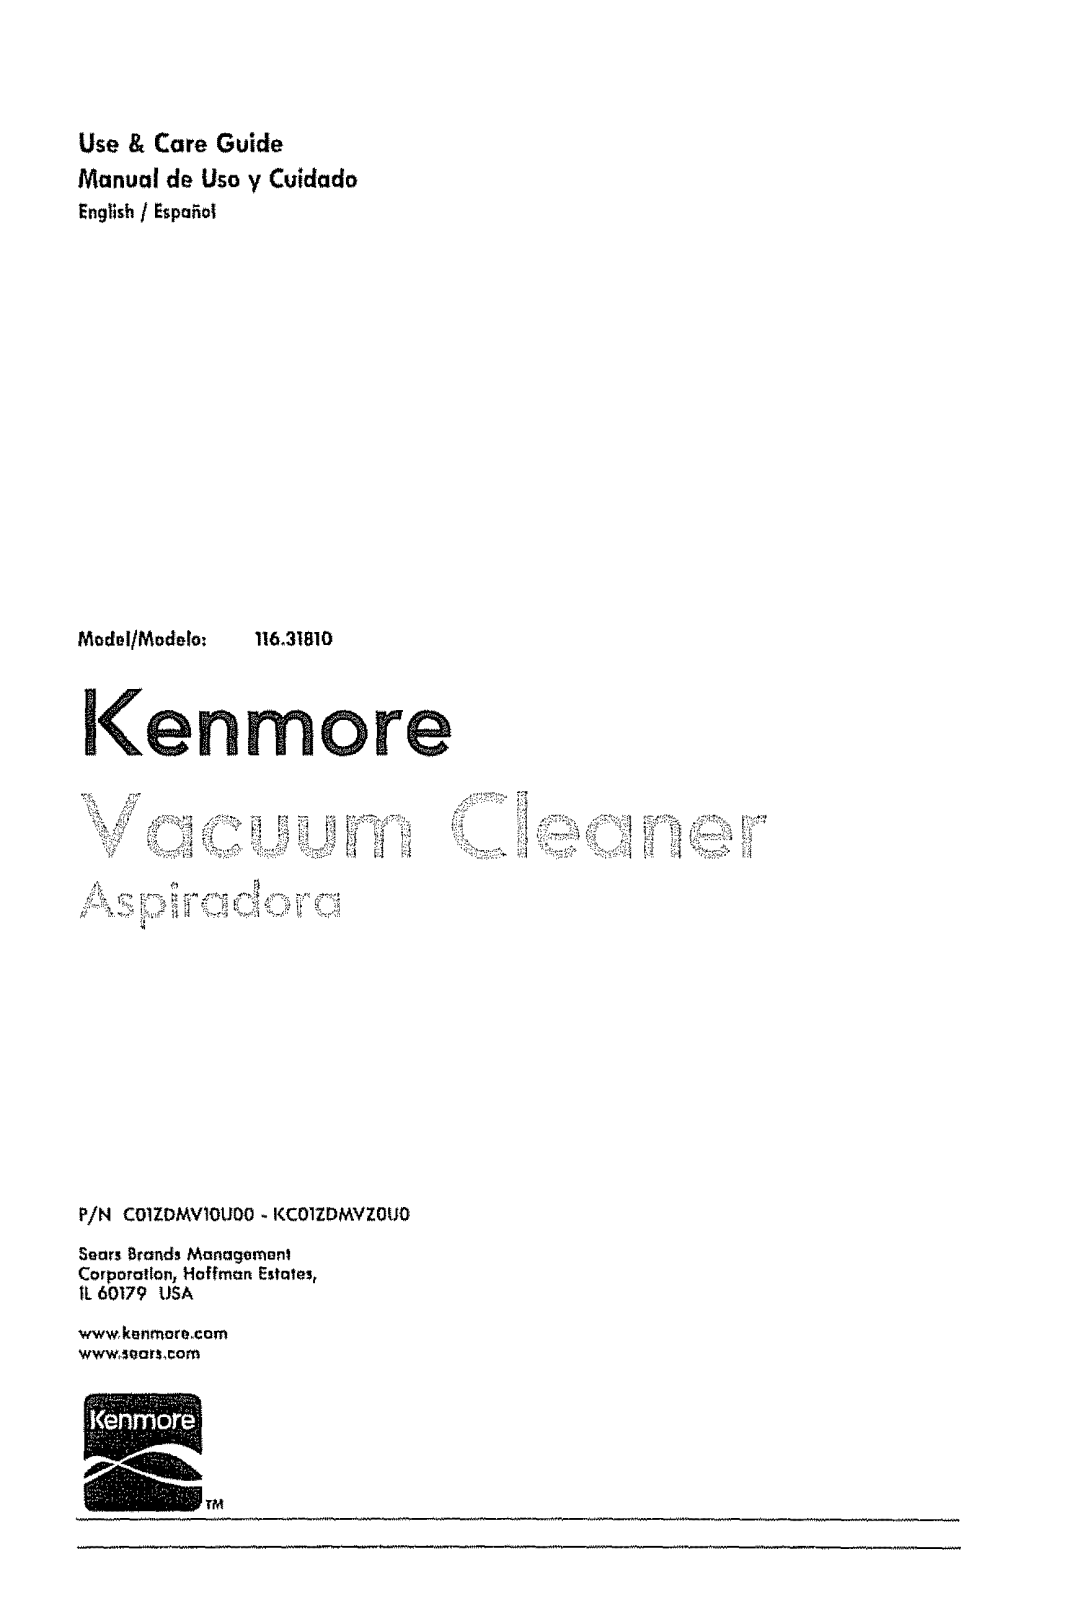 Kenmore 116.3181 manual Use & Care Guide Manual de Uso y Cuidado, Kenmore, Model!Modeo 116 3t810, v,ww,k_nmor _.com 